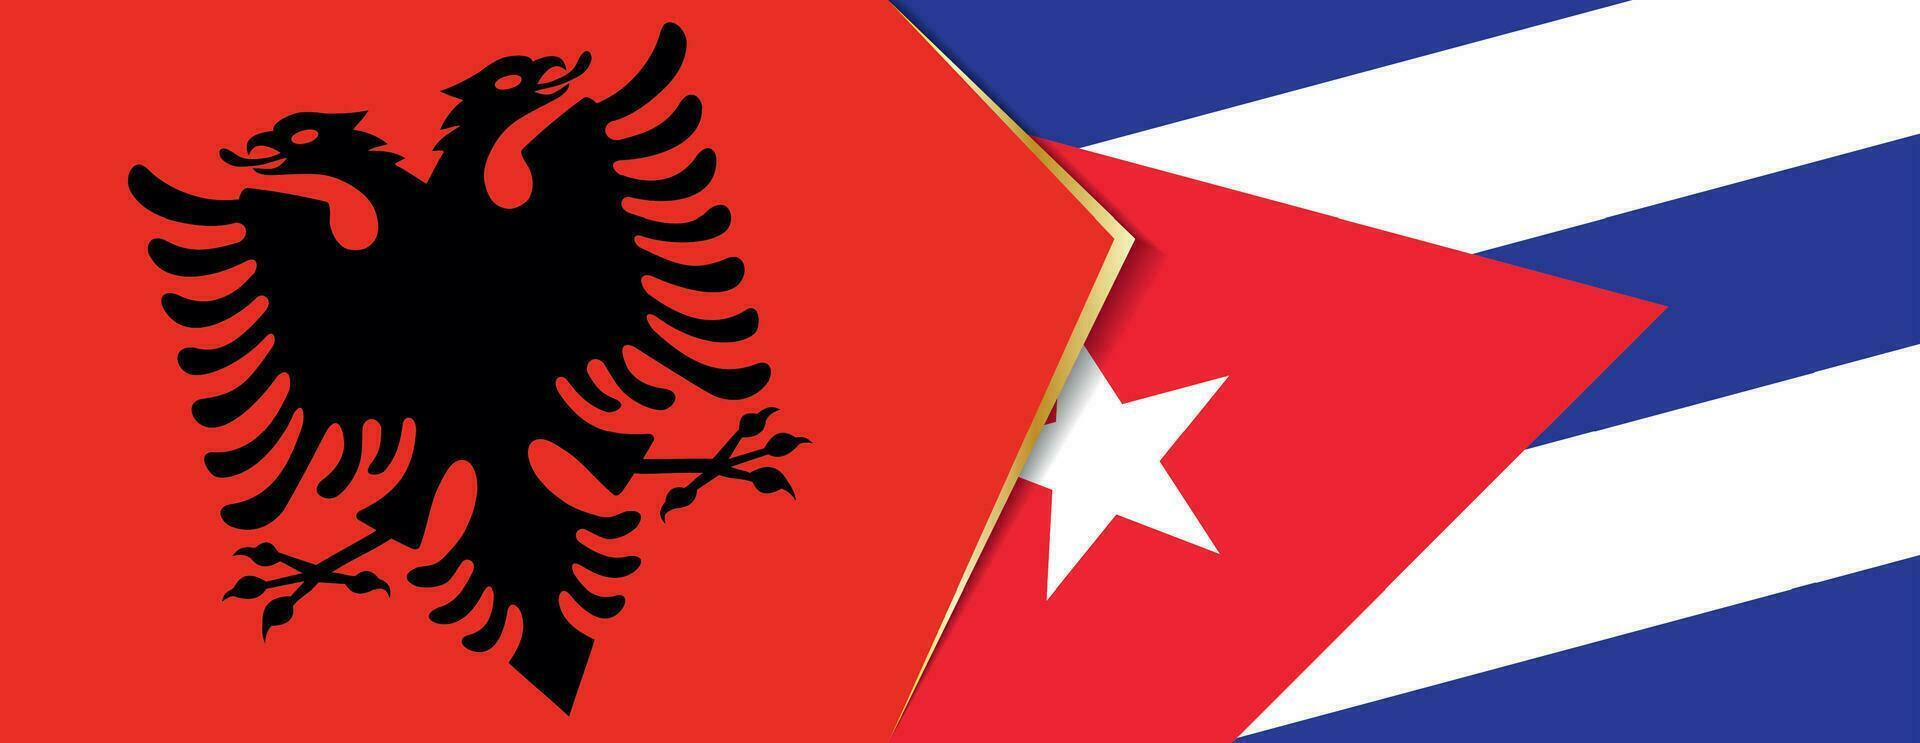 Albanien und Kuba Flaggen, zwei Vektor Flaggen.